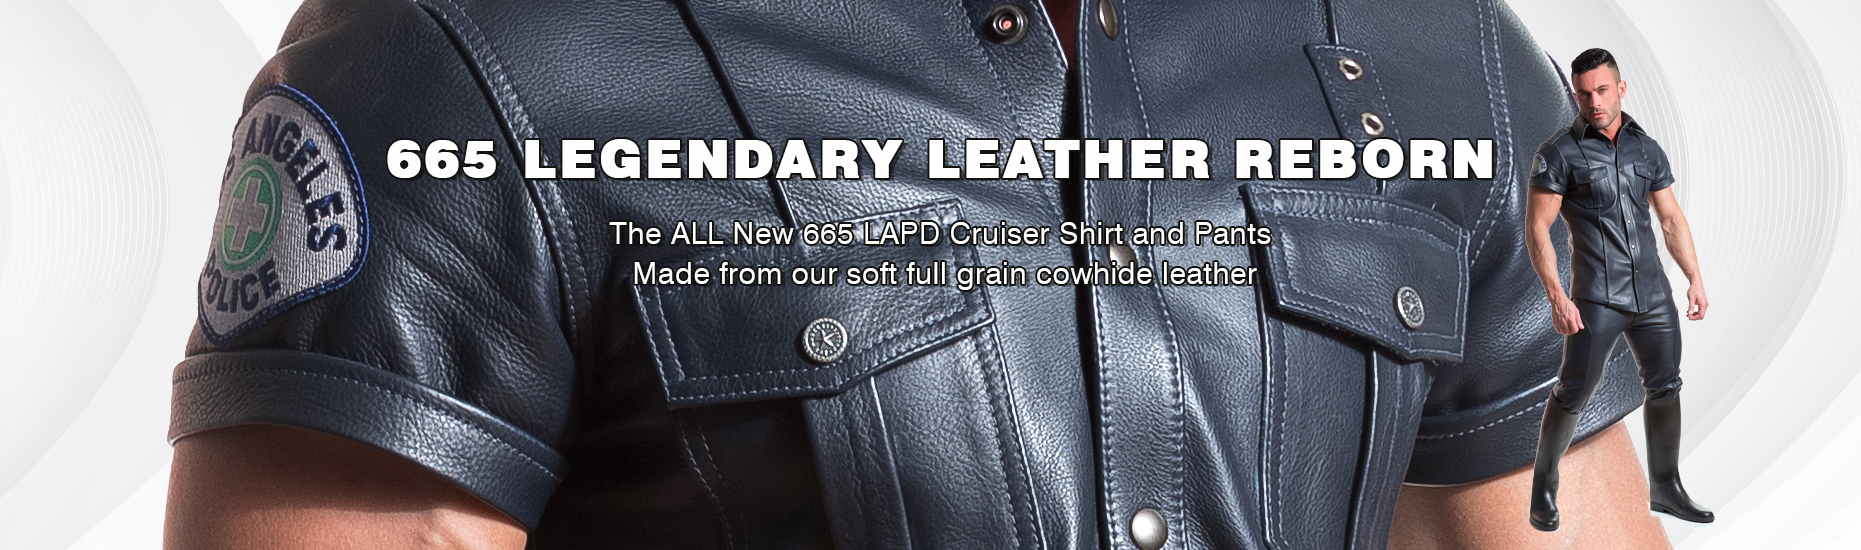 665 Legendary Leather Reborn